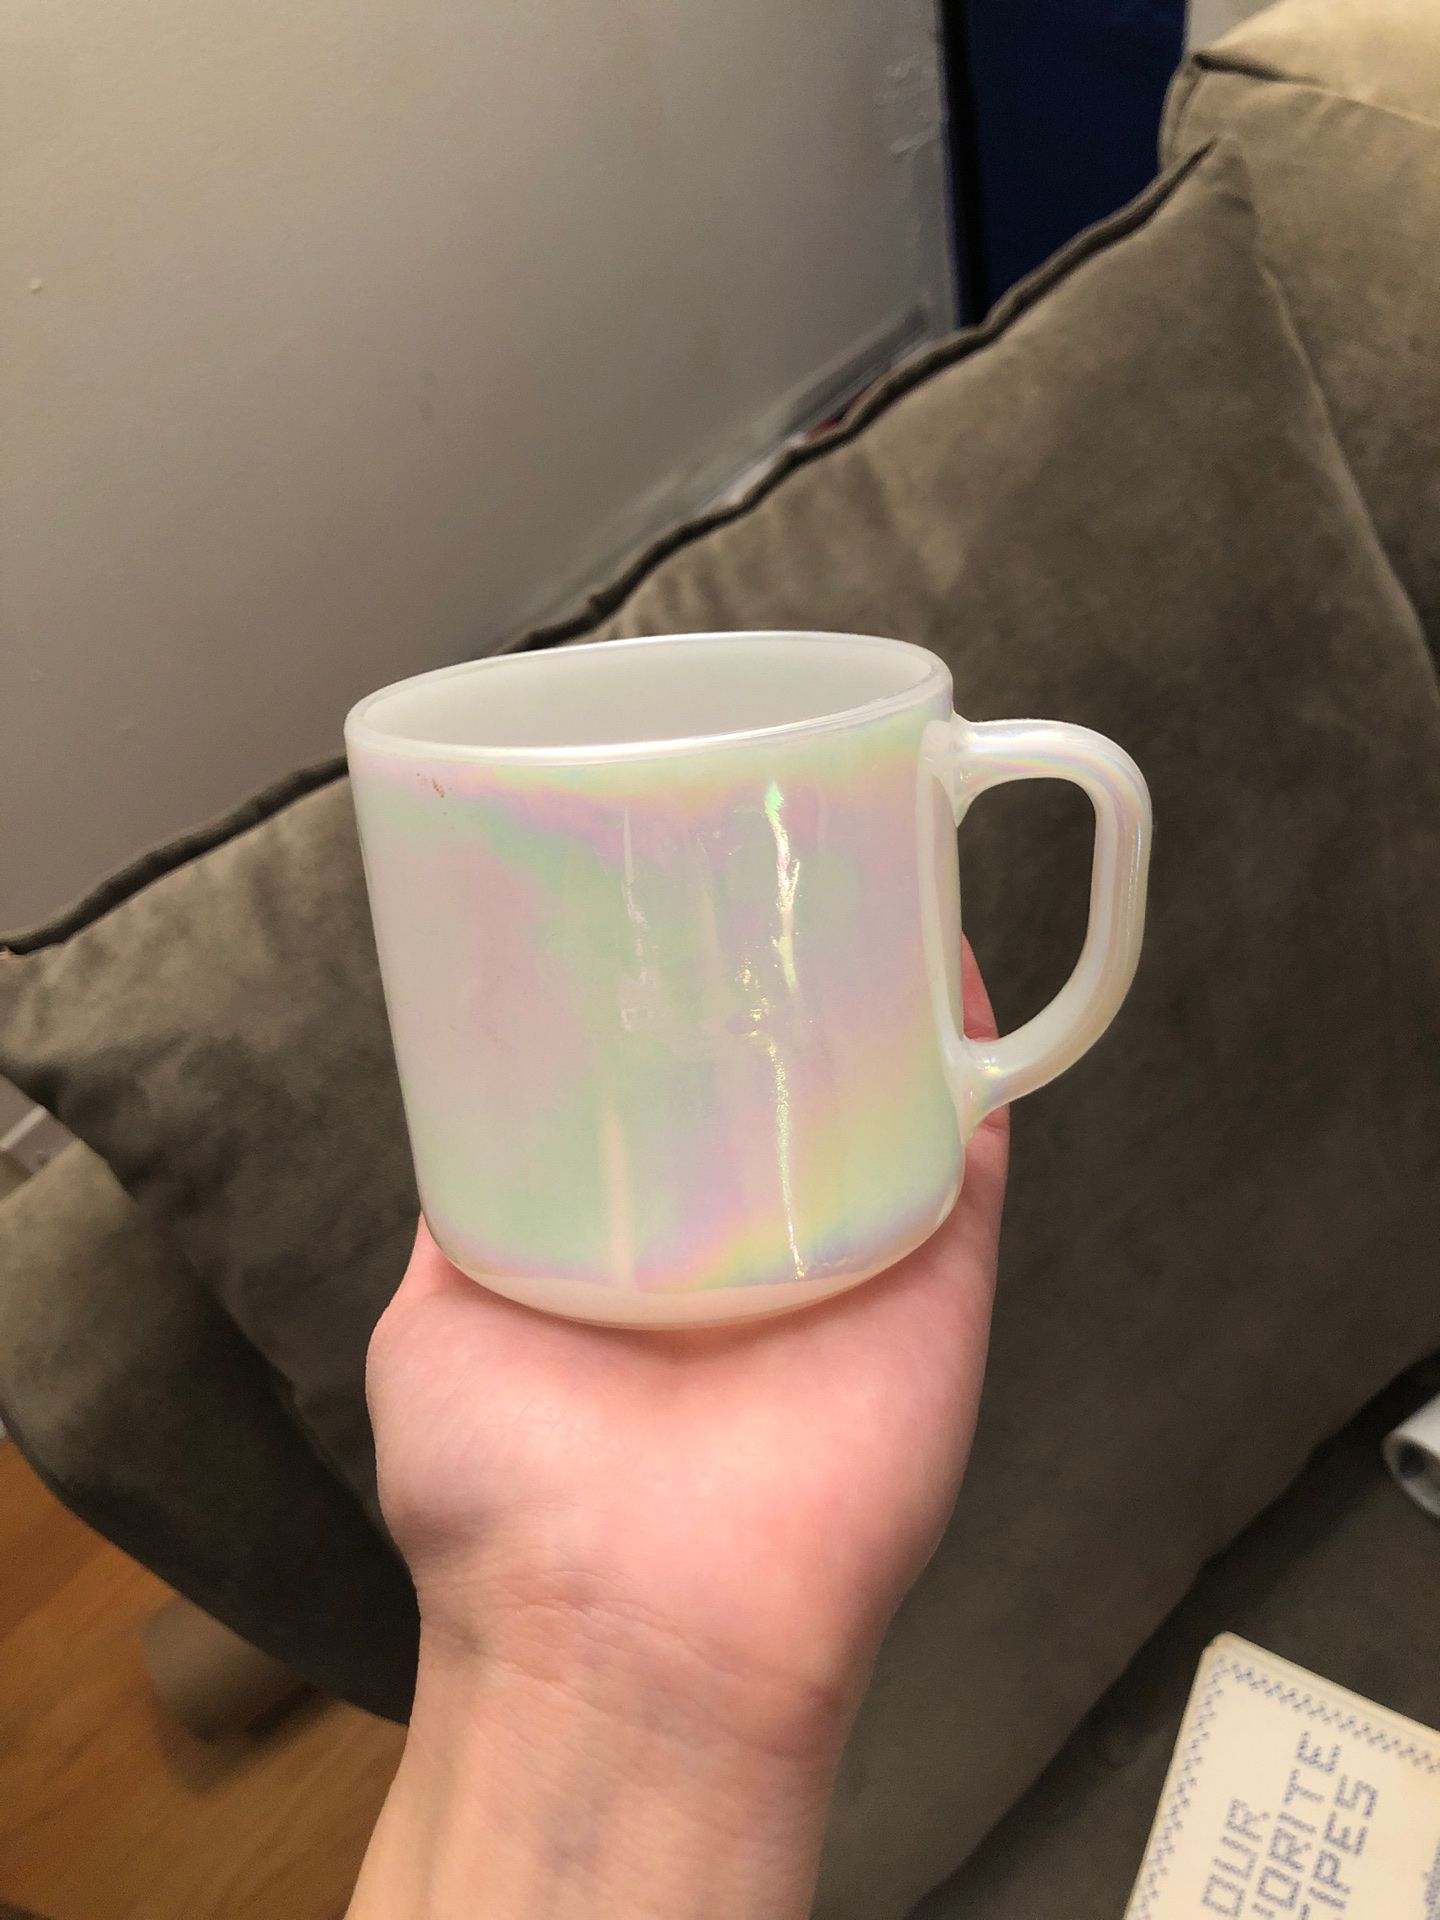 Pearl / Iridescent coffee mug and breakfast bowl